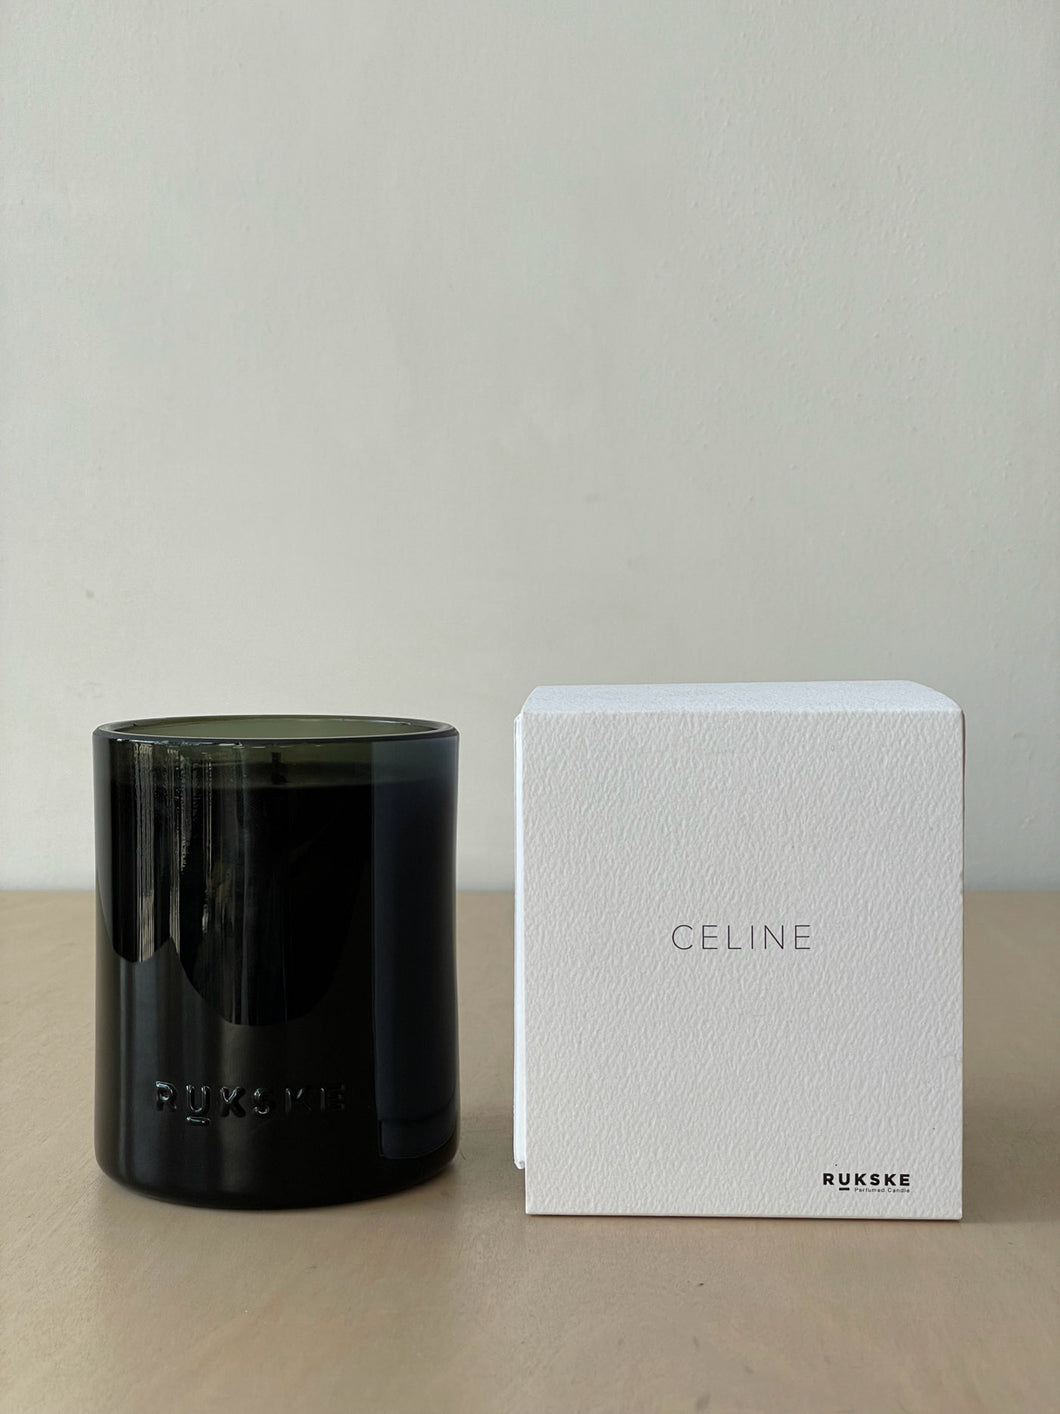 Celine Candle by Rukske